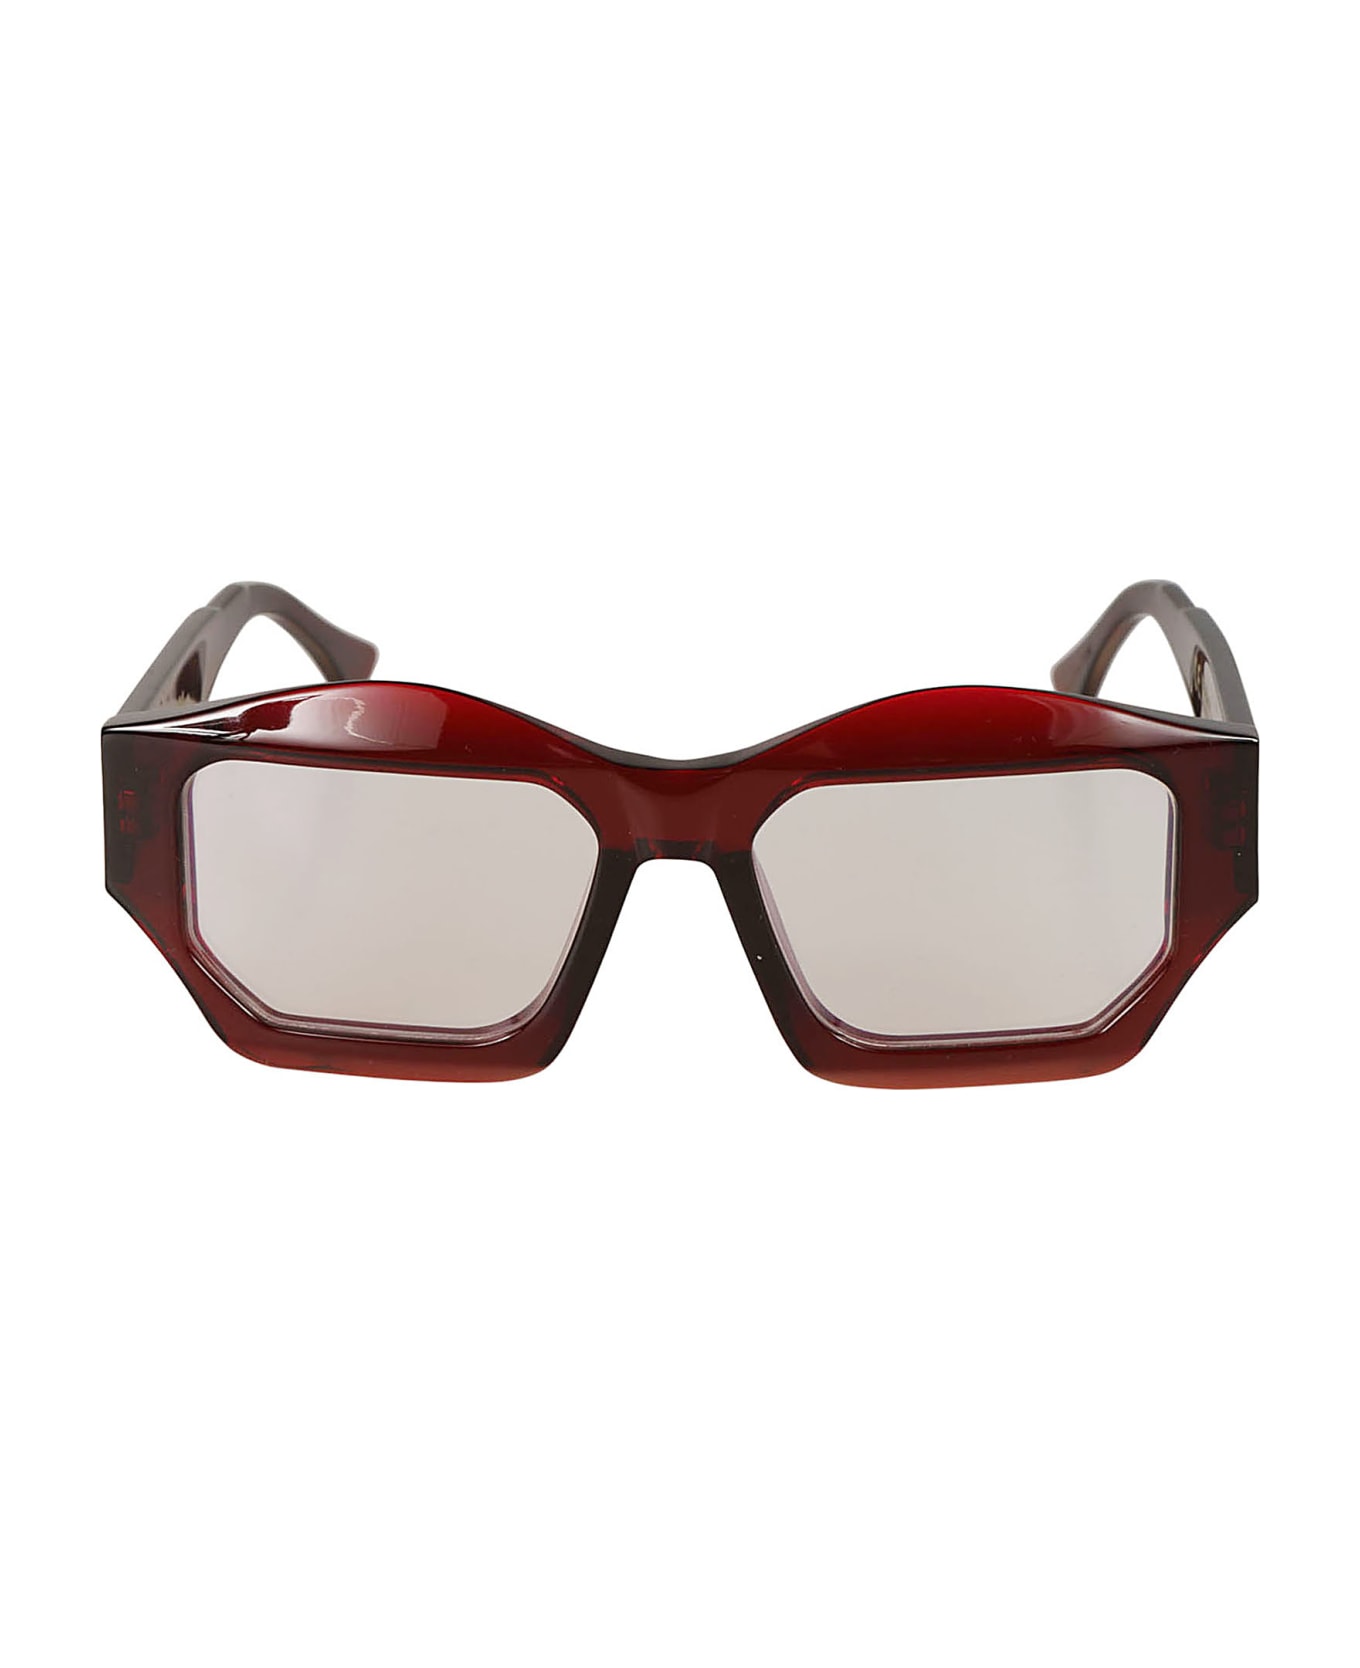 Kuboraum F4 Glasses Glasses - bordeaux アイウェア